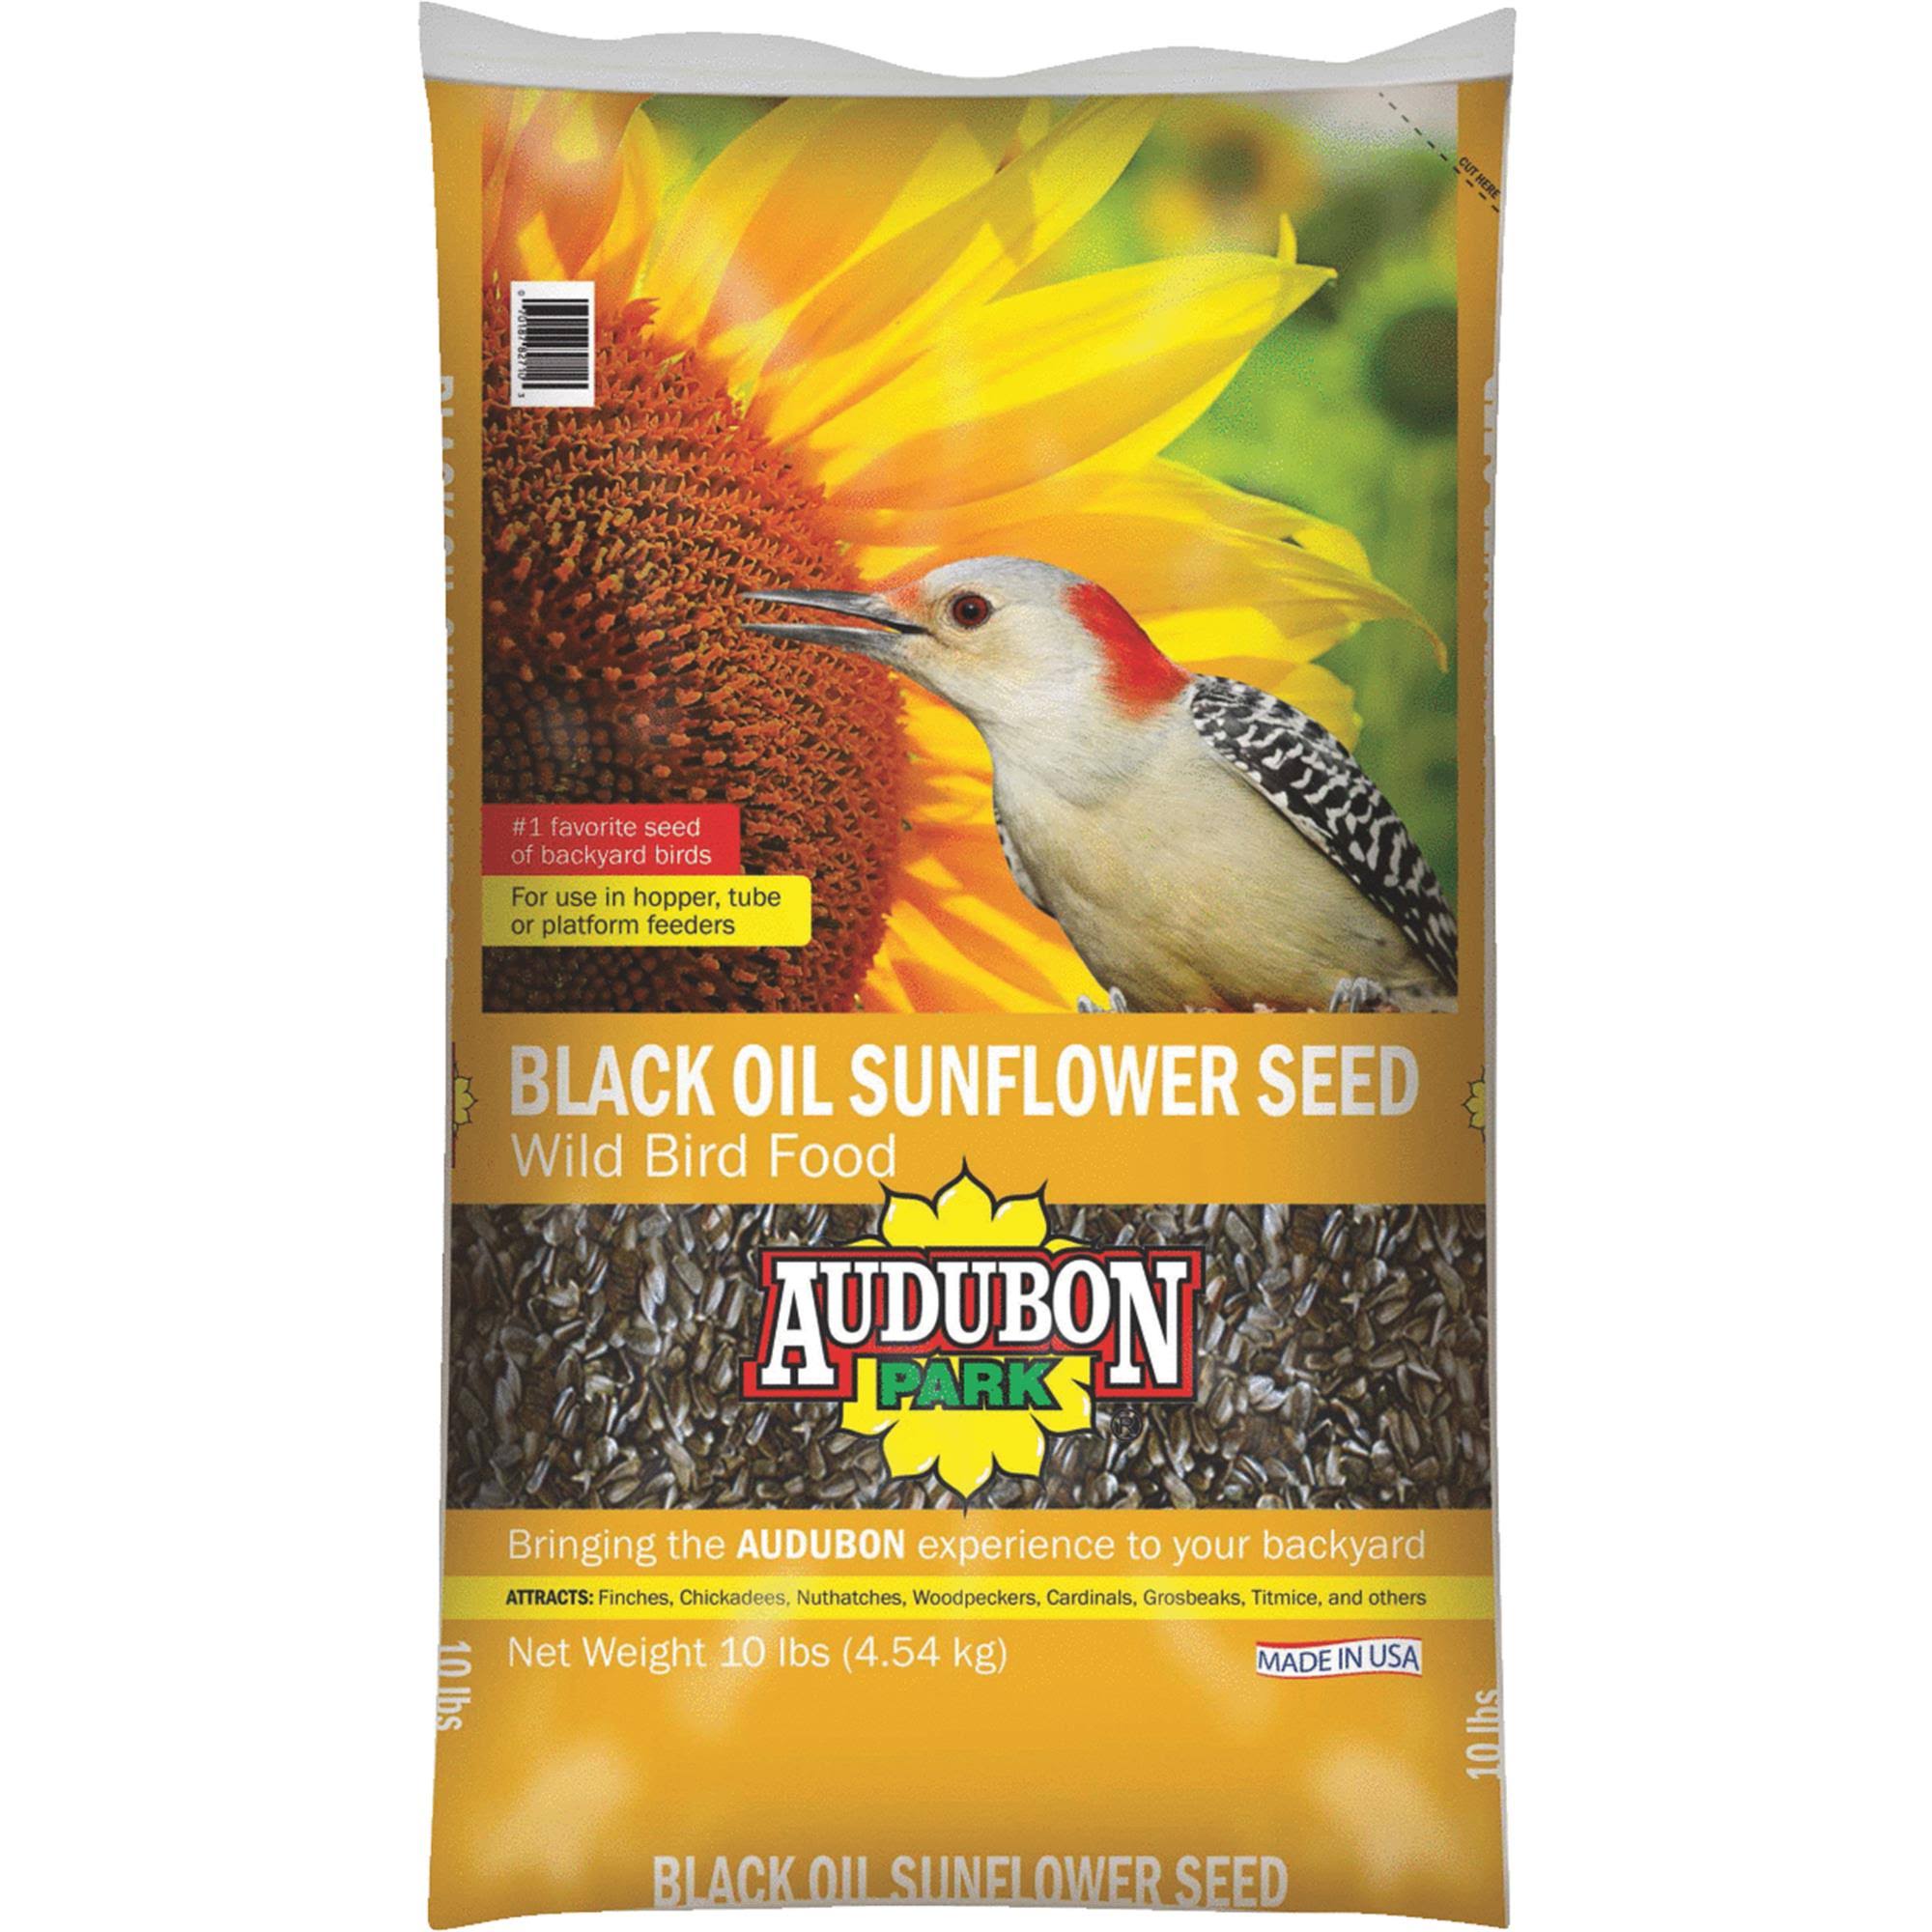 Audubon Park 12261 Black Oil Sunflower Seed Wild Bird Food - 10lbs